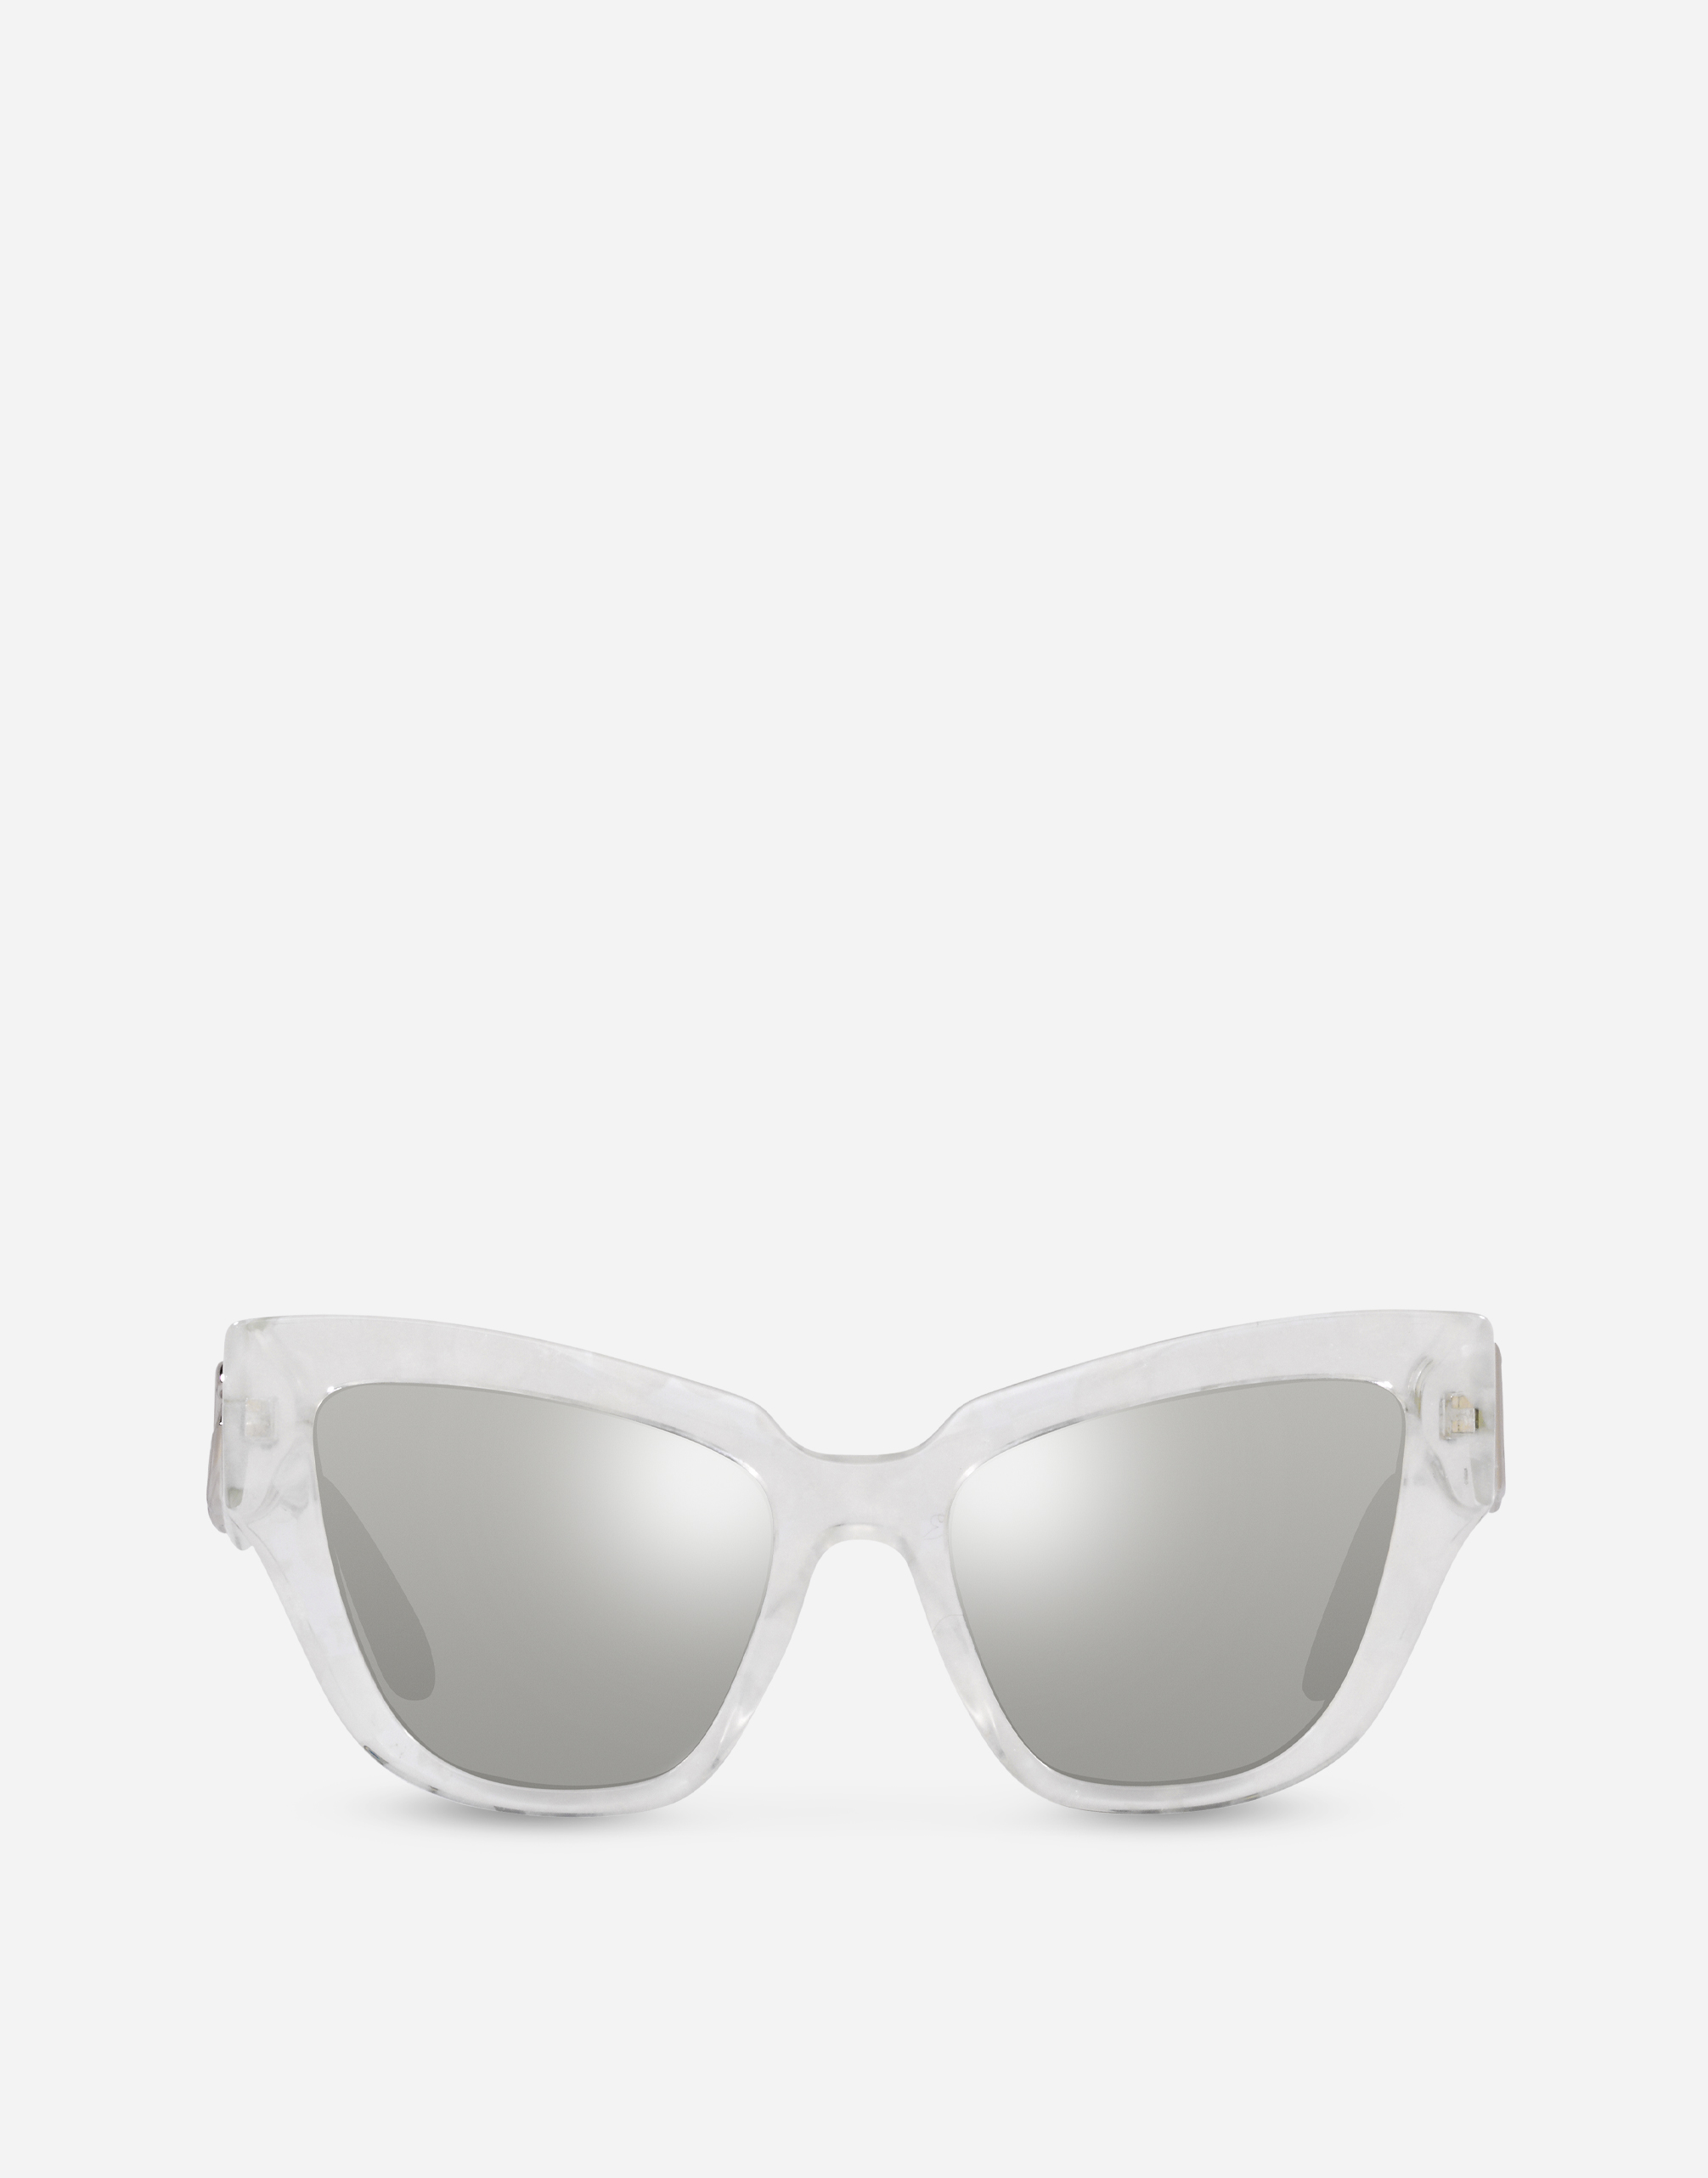 DG crossed sunglasses in Grey bubble